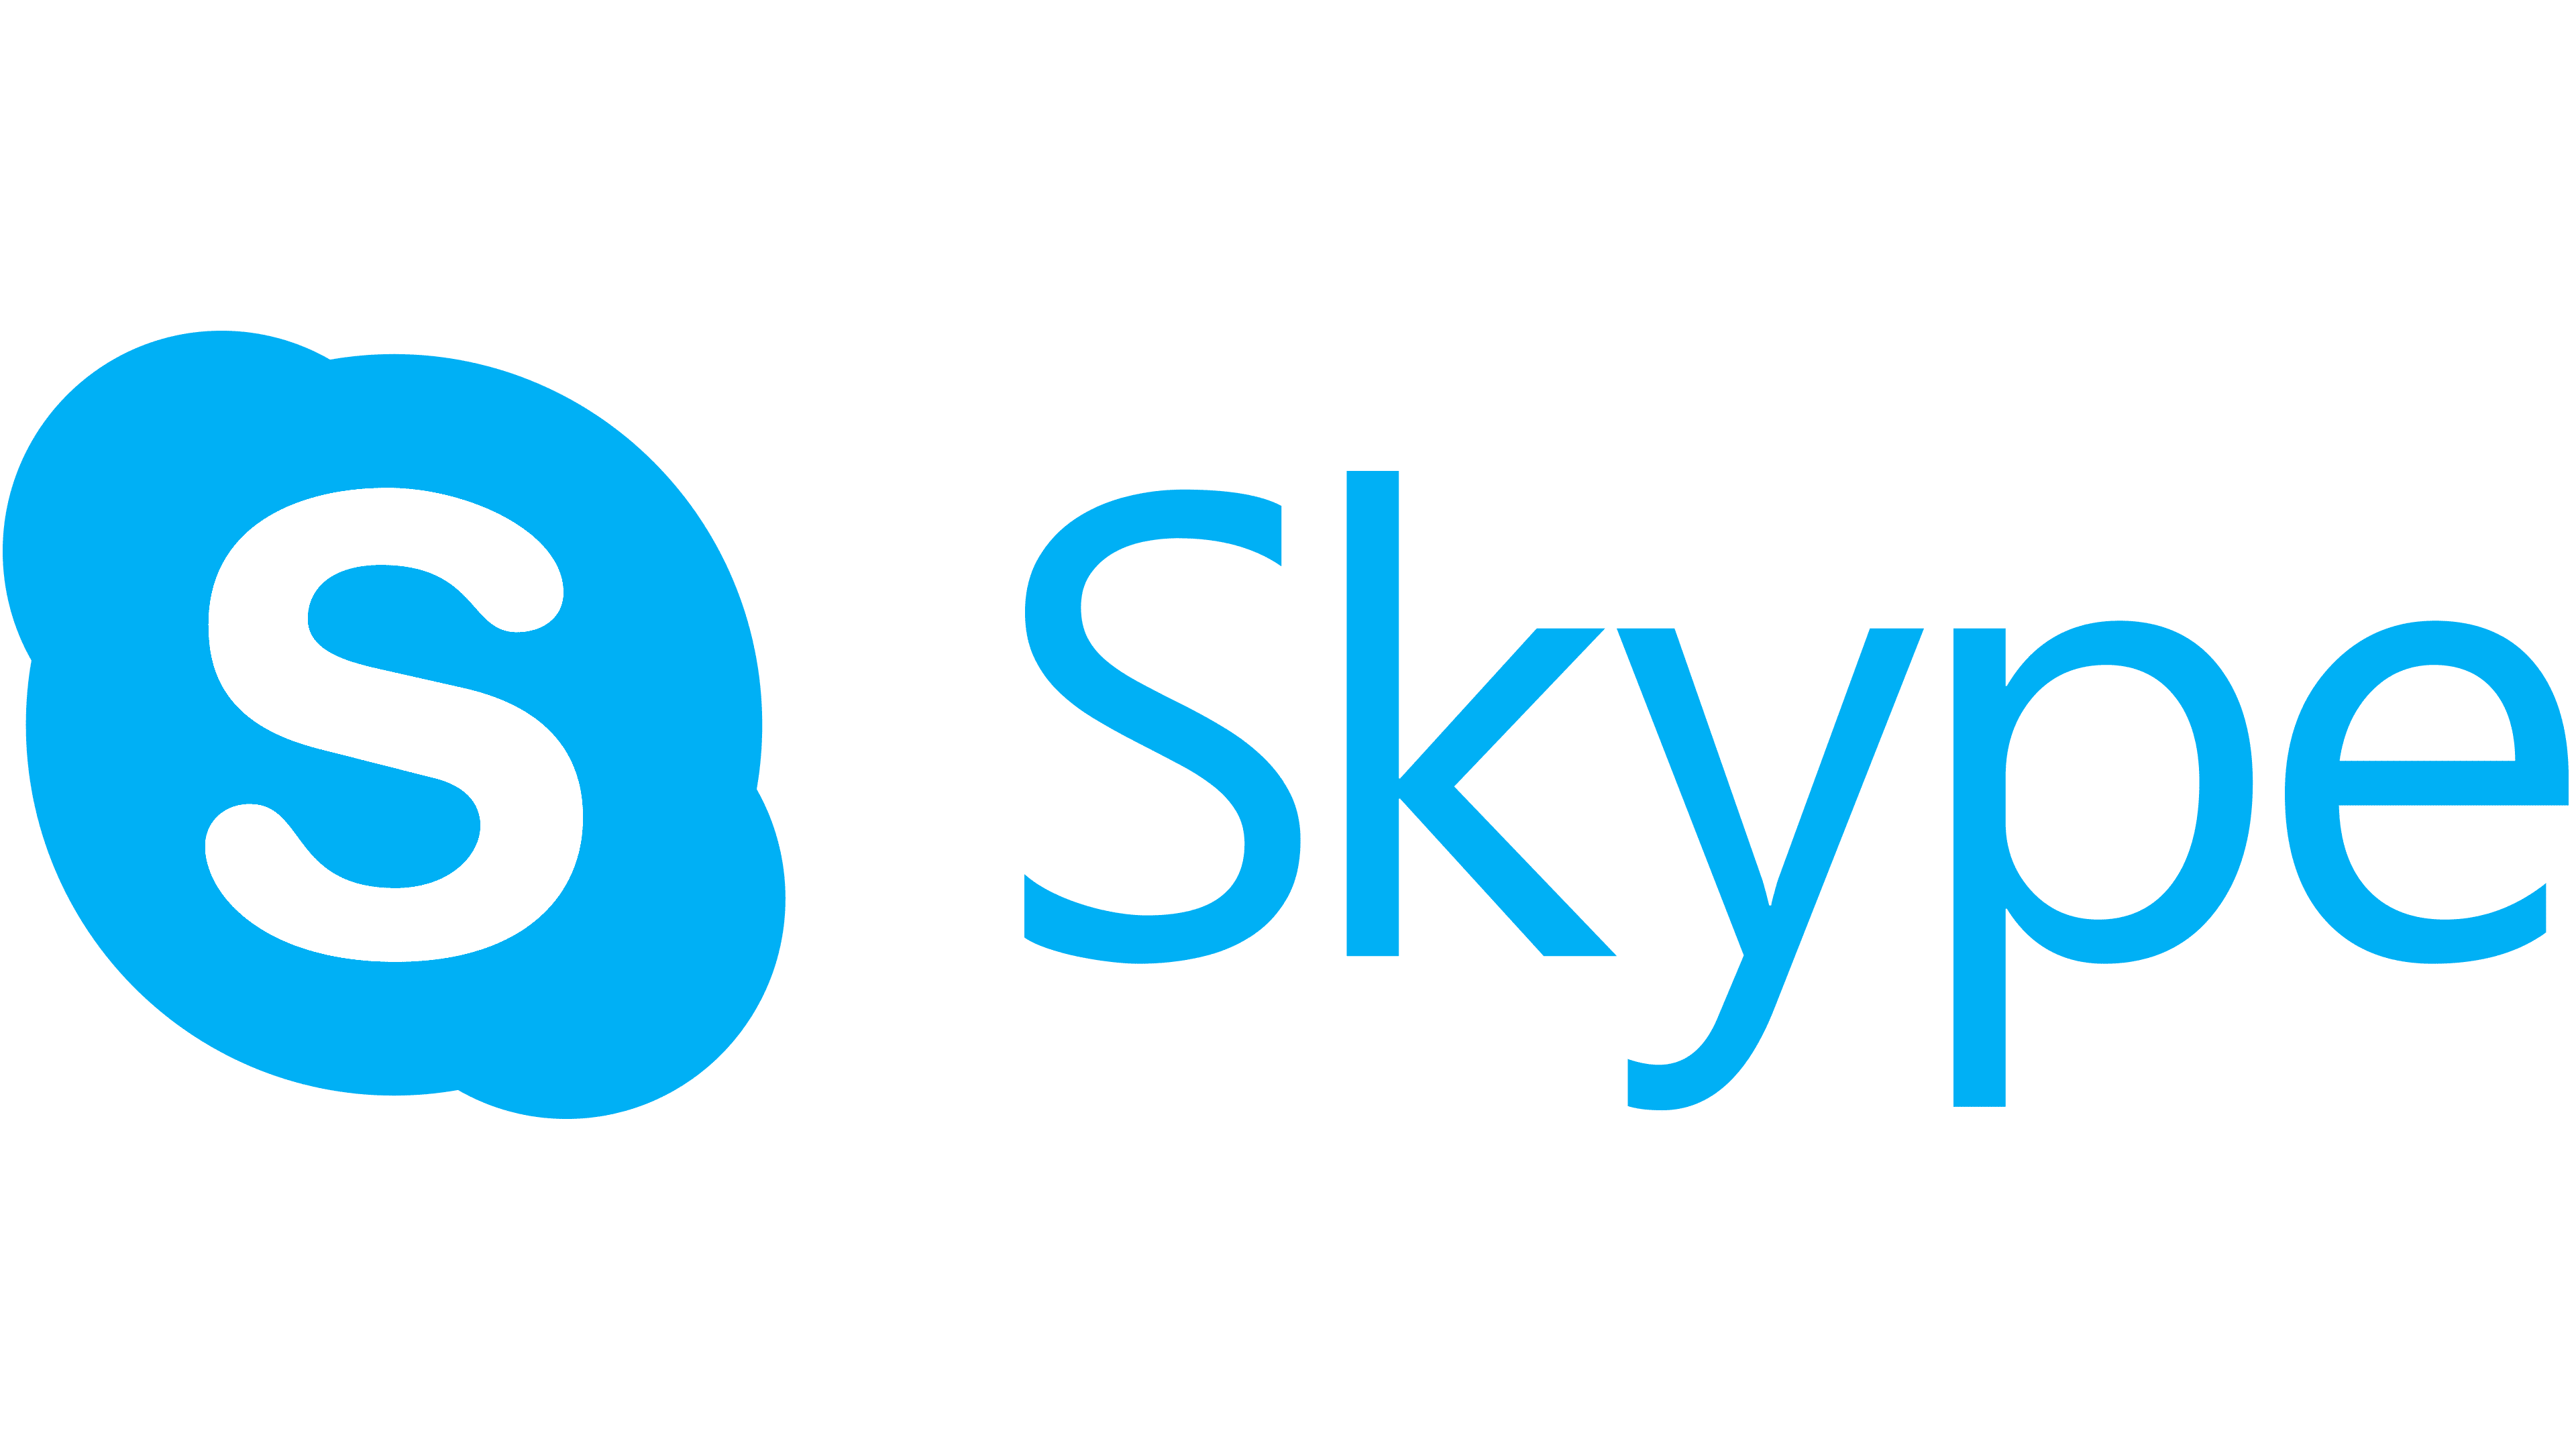 2019 skype logo